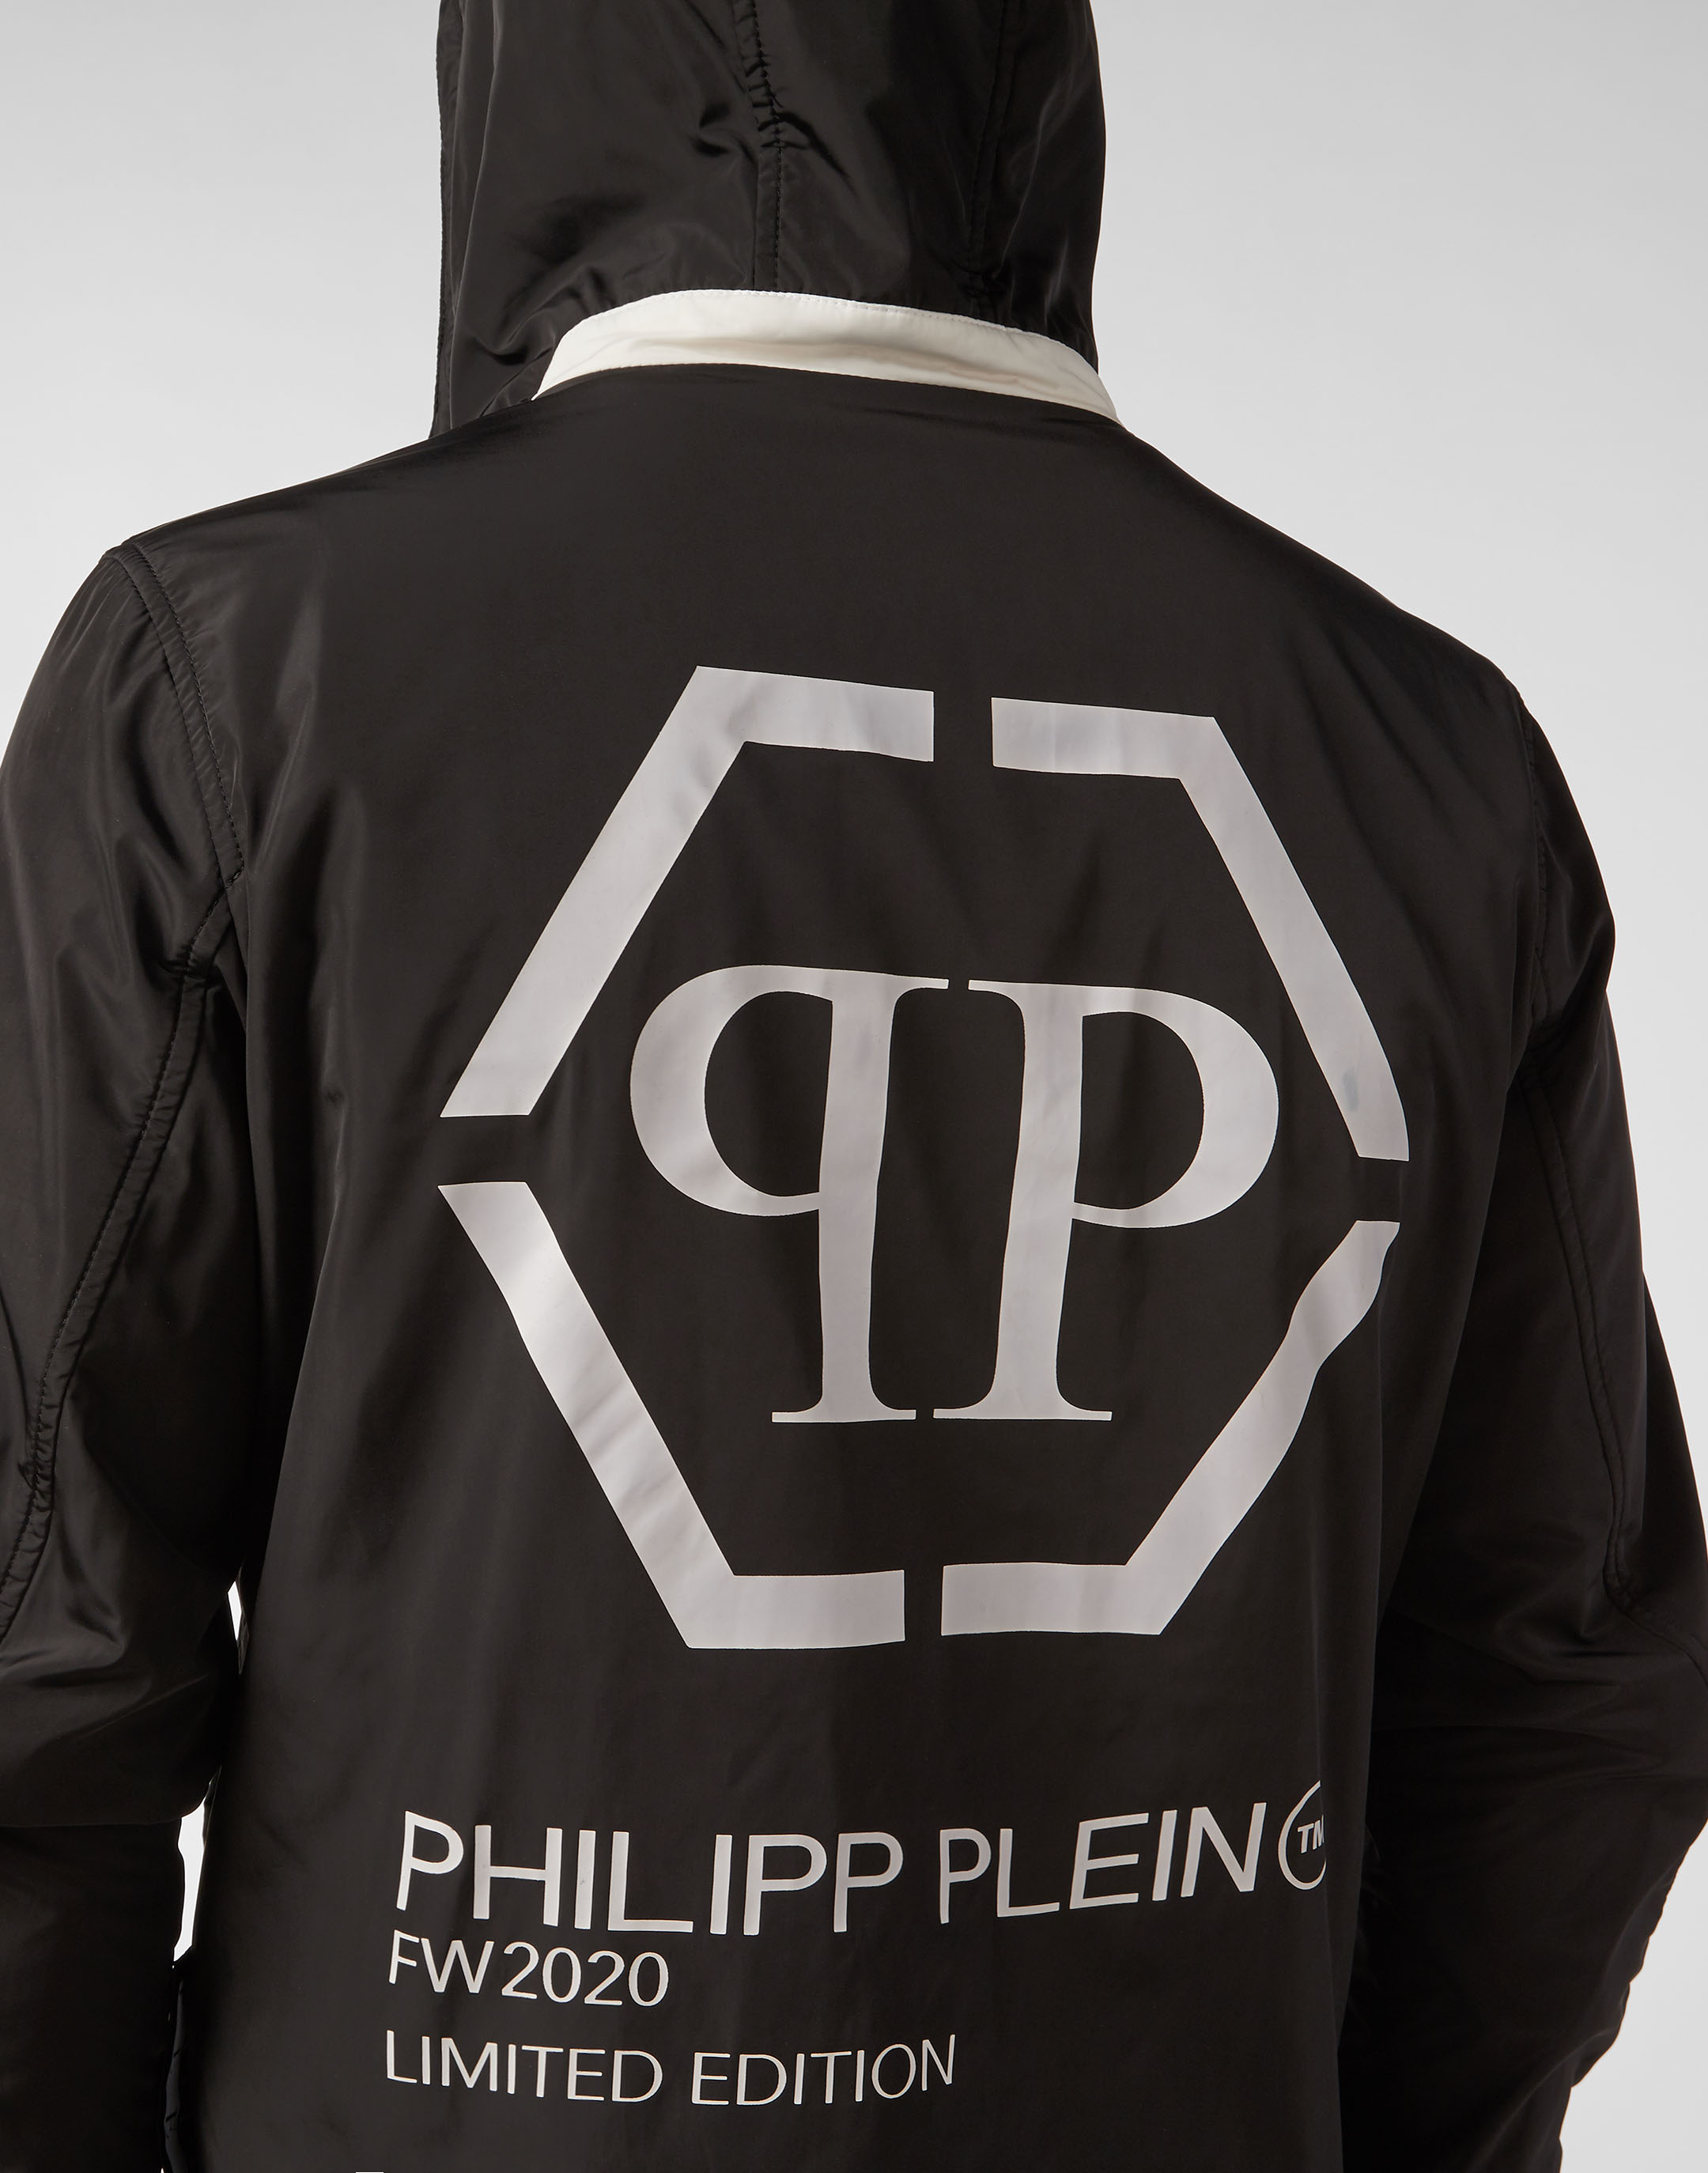 philipp plein jacket limited edition